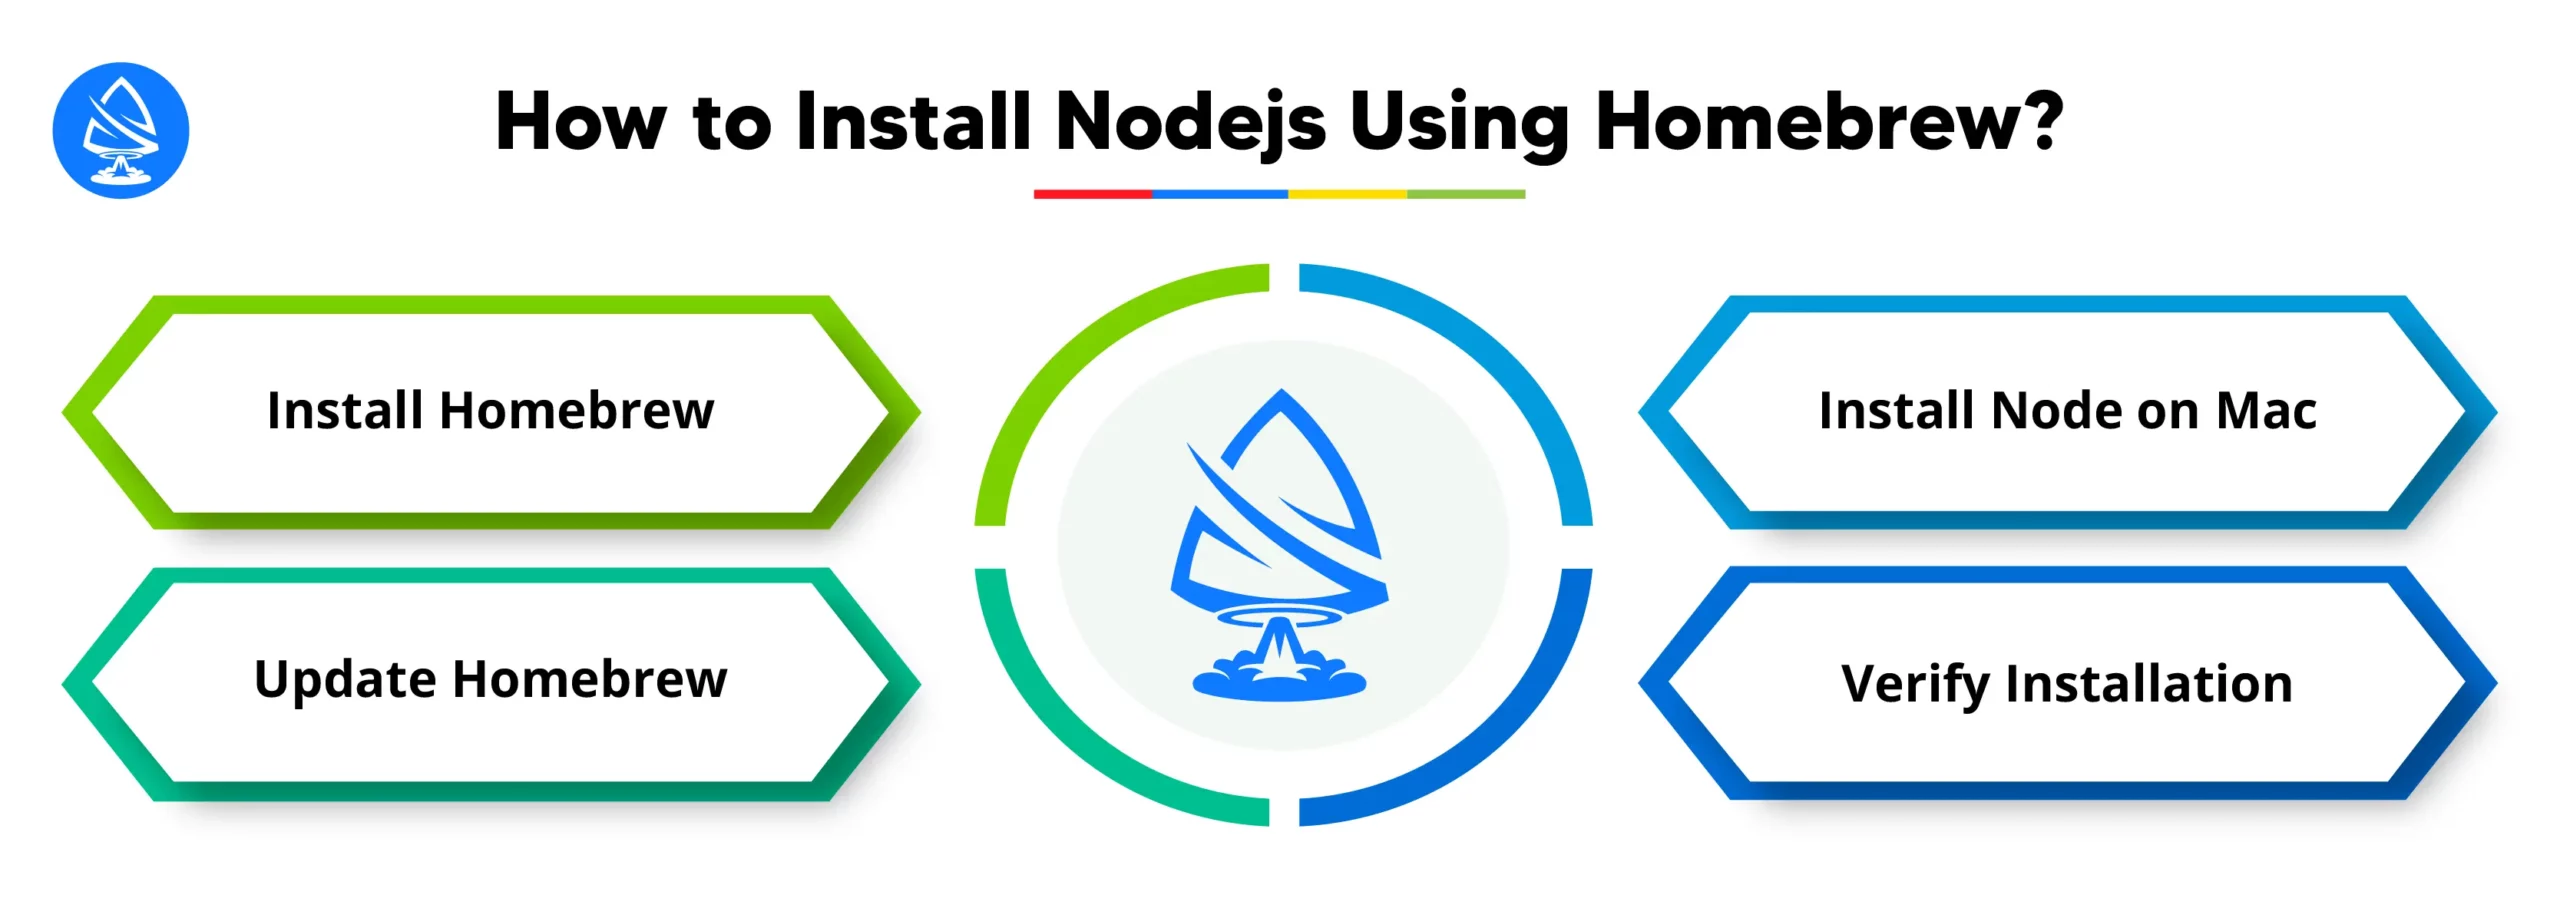 How to Install Nodejs Using “Homebrew”? 